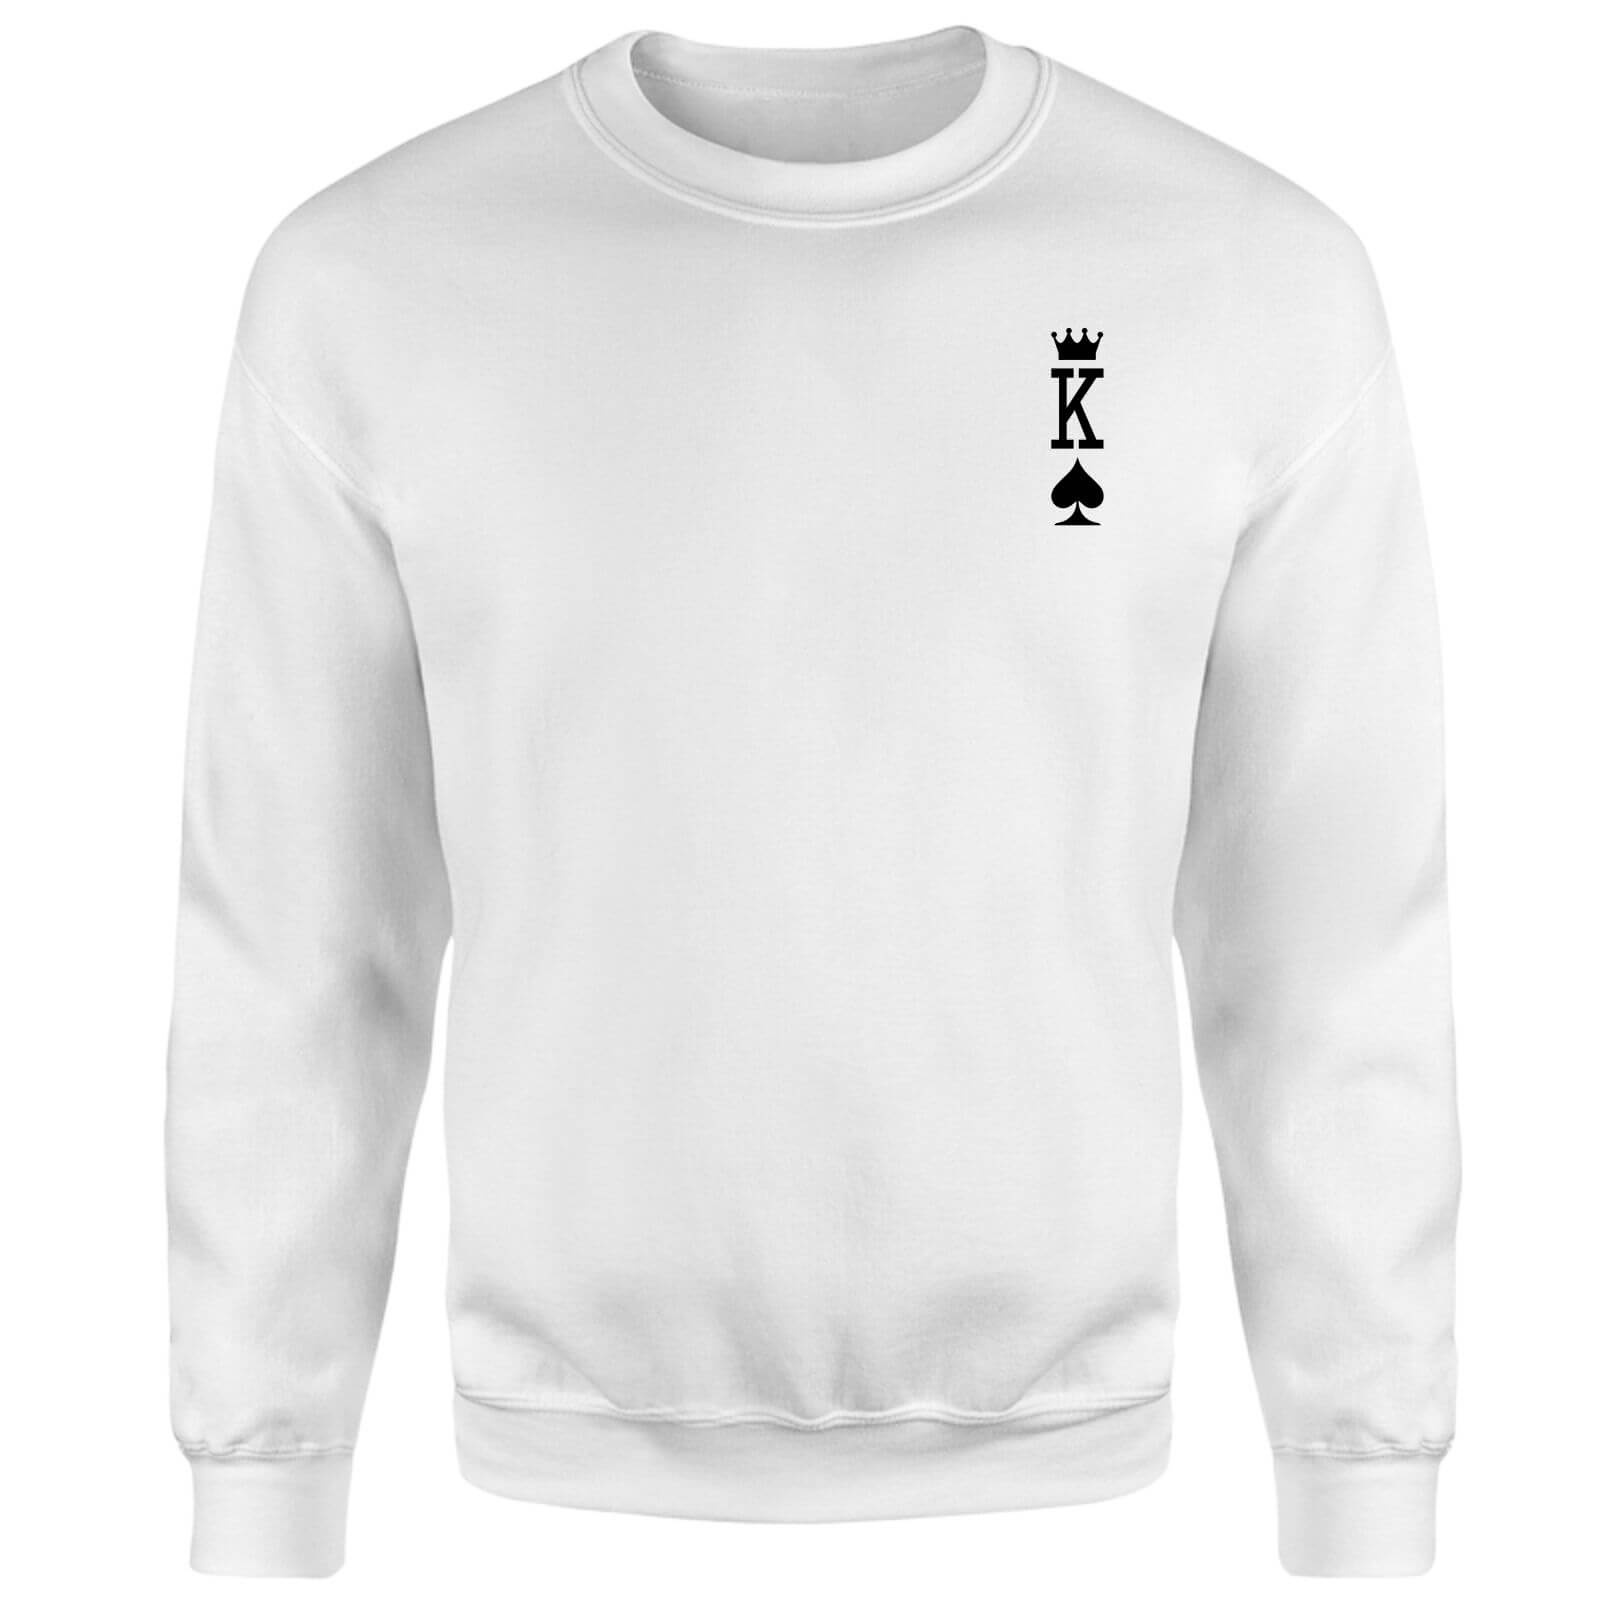 King Of Spade Sweatshirt - White - XXL - White